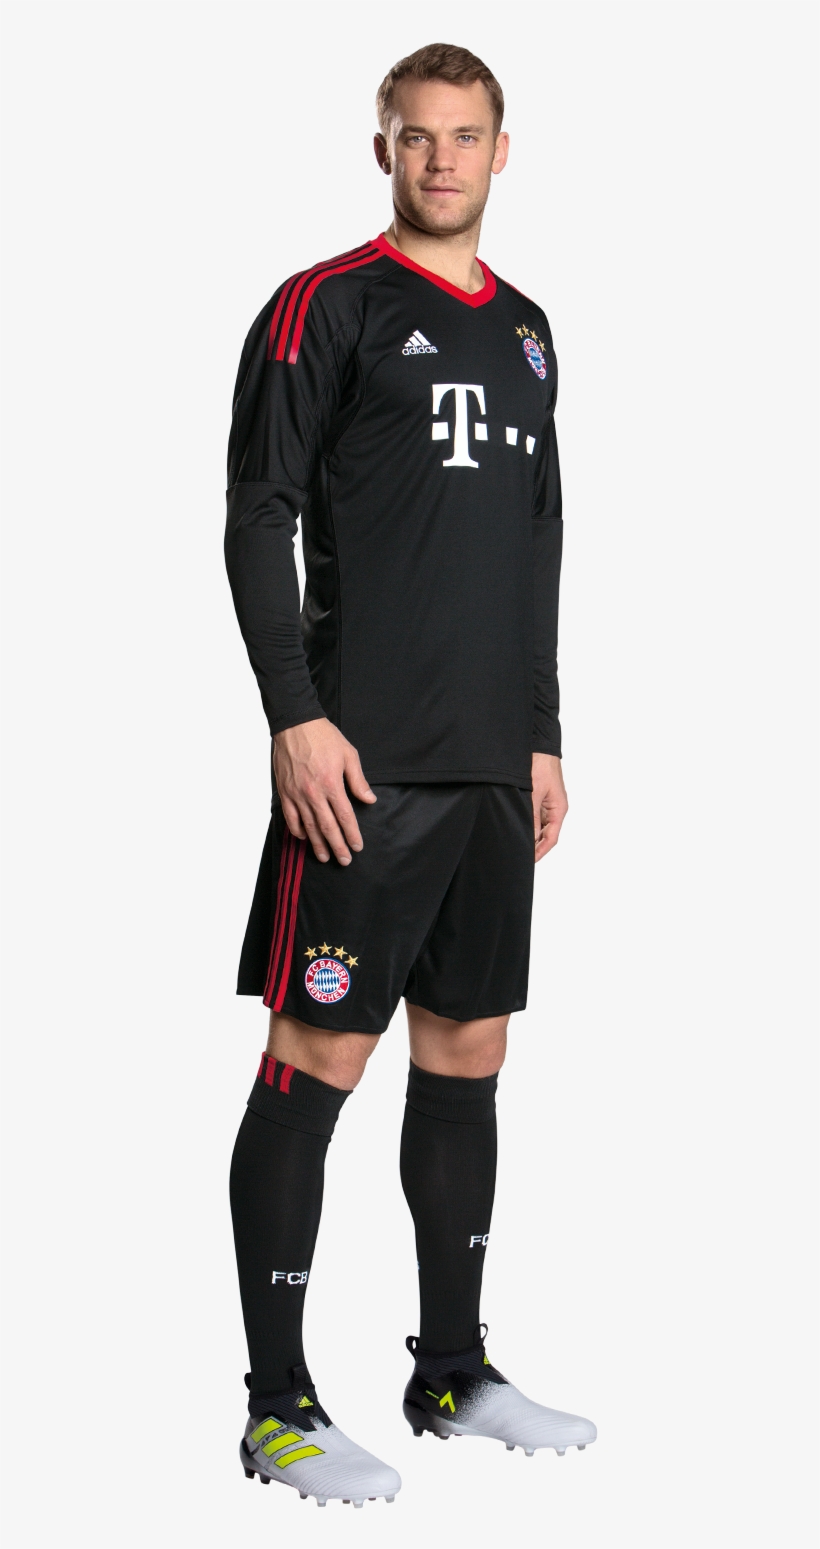 Neuer Png - Bayern Munich New Kit 2012, transparent png #5907291